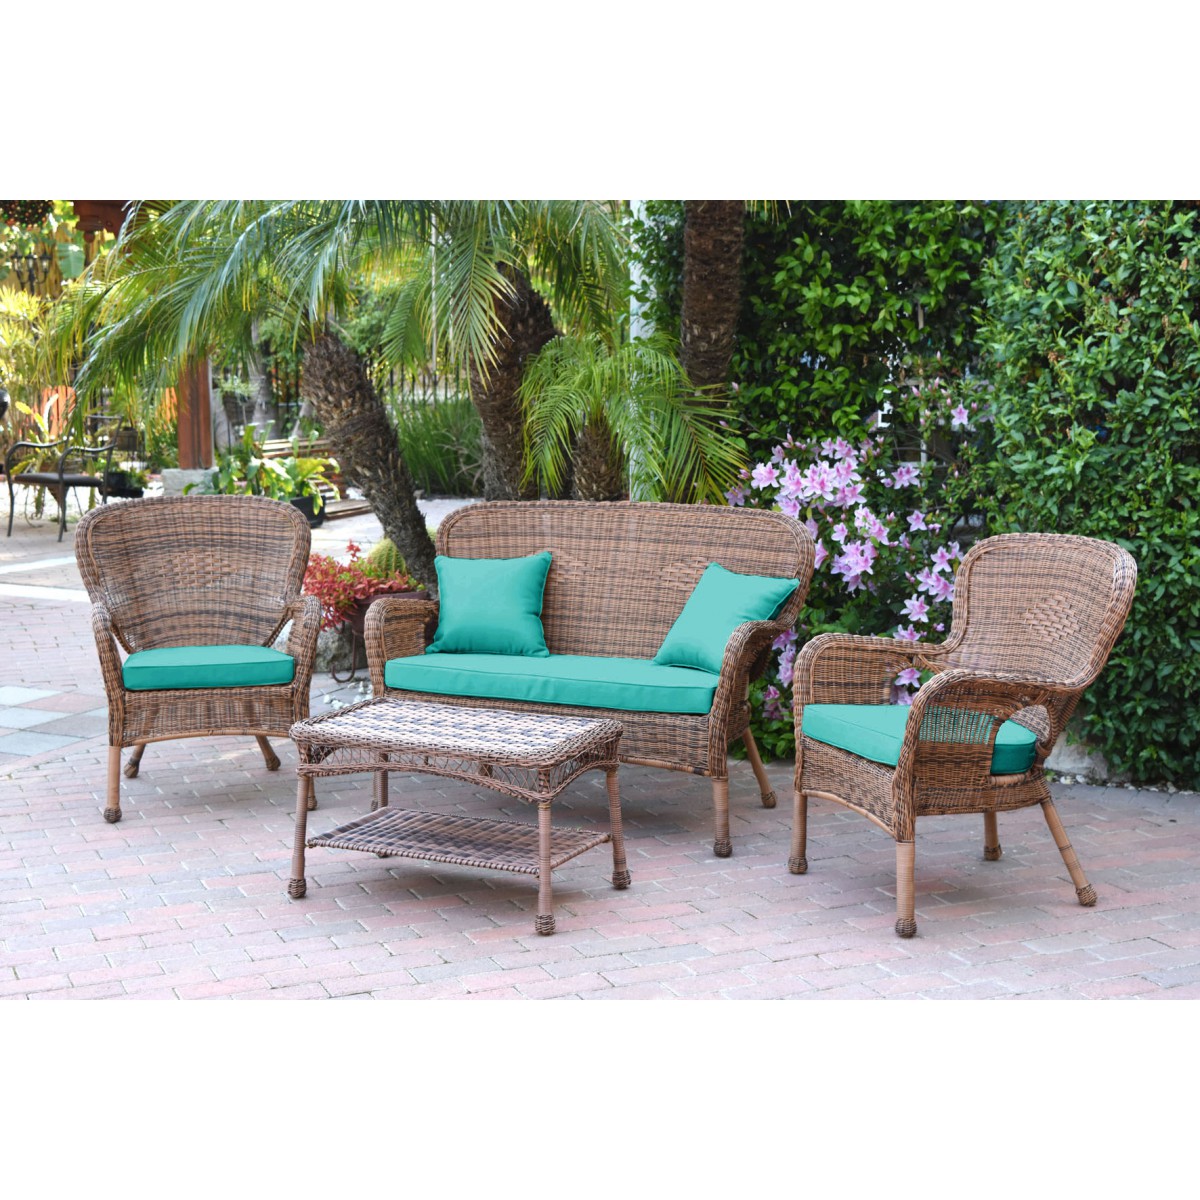 4pc Windsor Honey Wicker Conversation Set - Turquoise Cushions